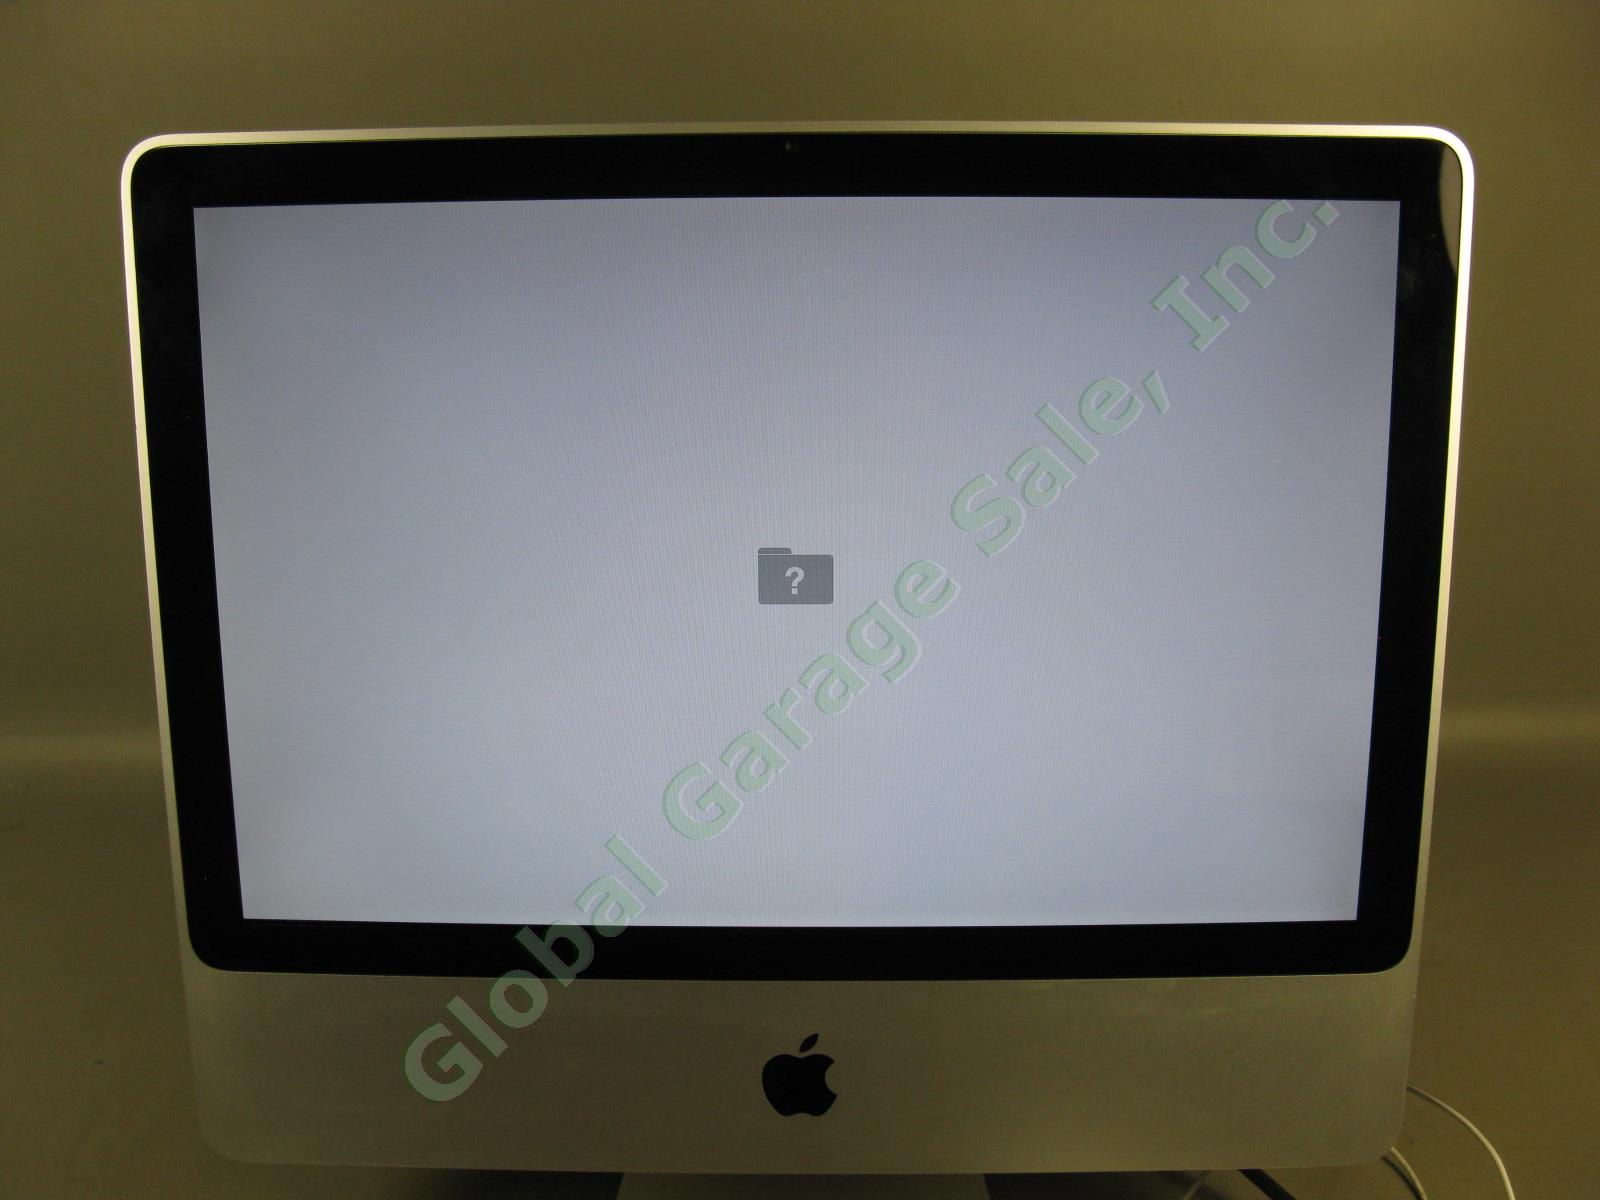 Apple iMac A1224 20" 2.26GHz Intel Core 2 Duo P7550 2GB RAM 160GB HDD MC015LL/B 1